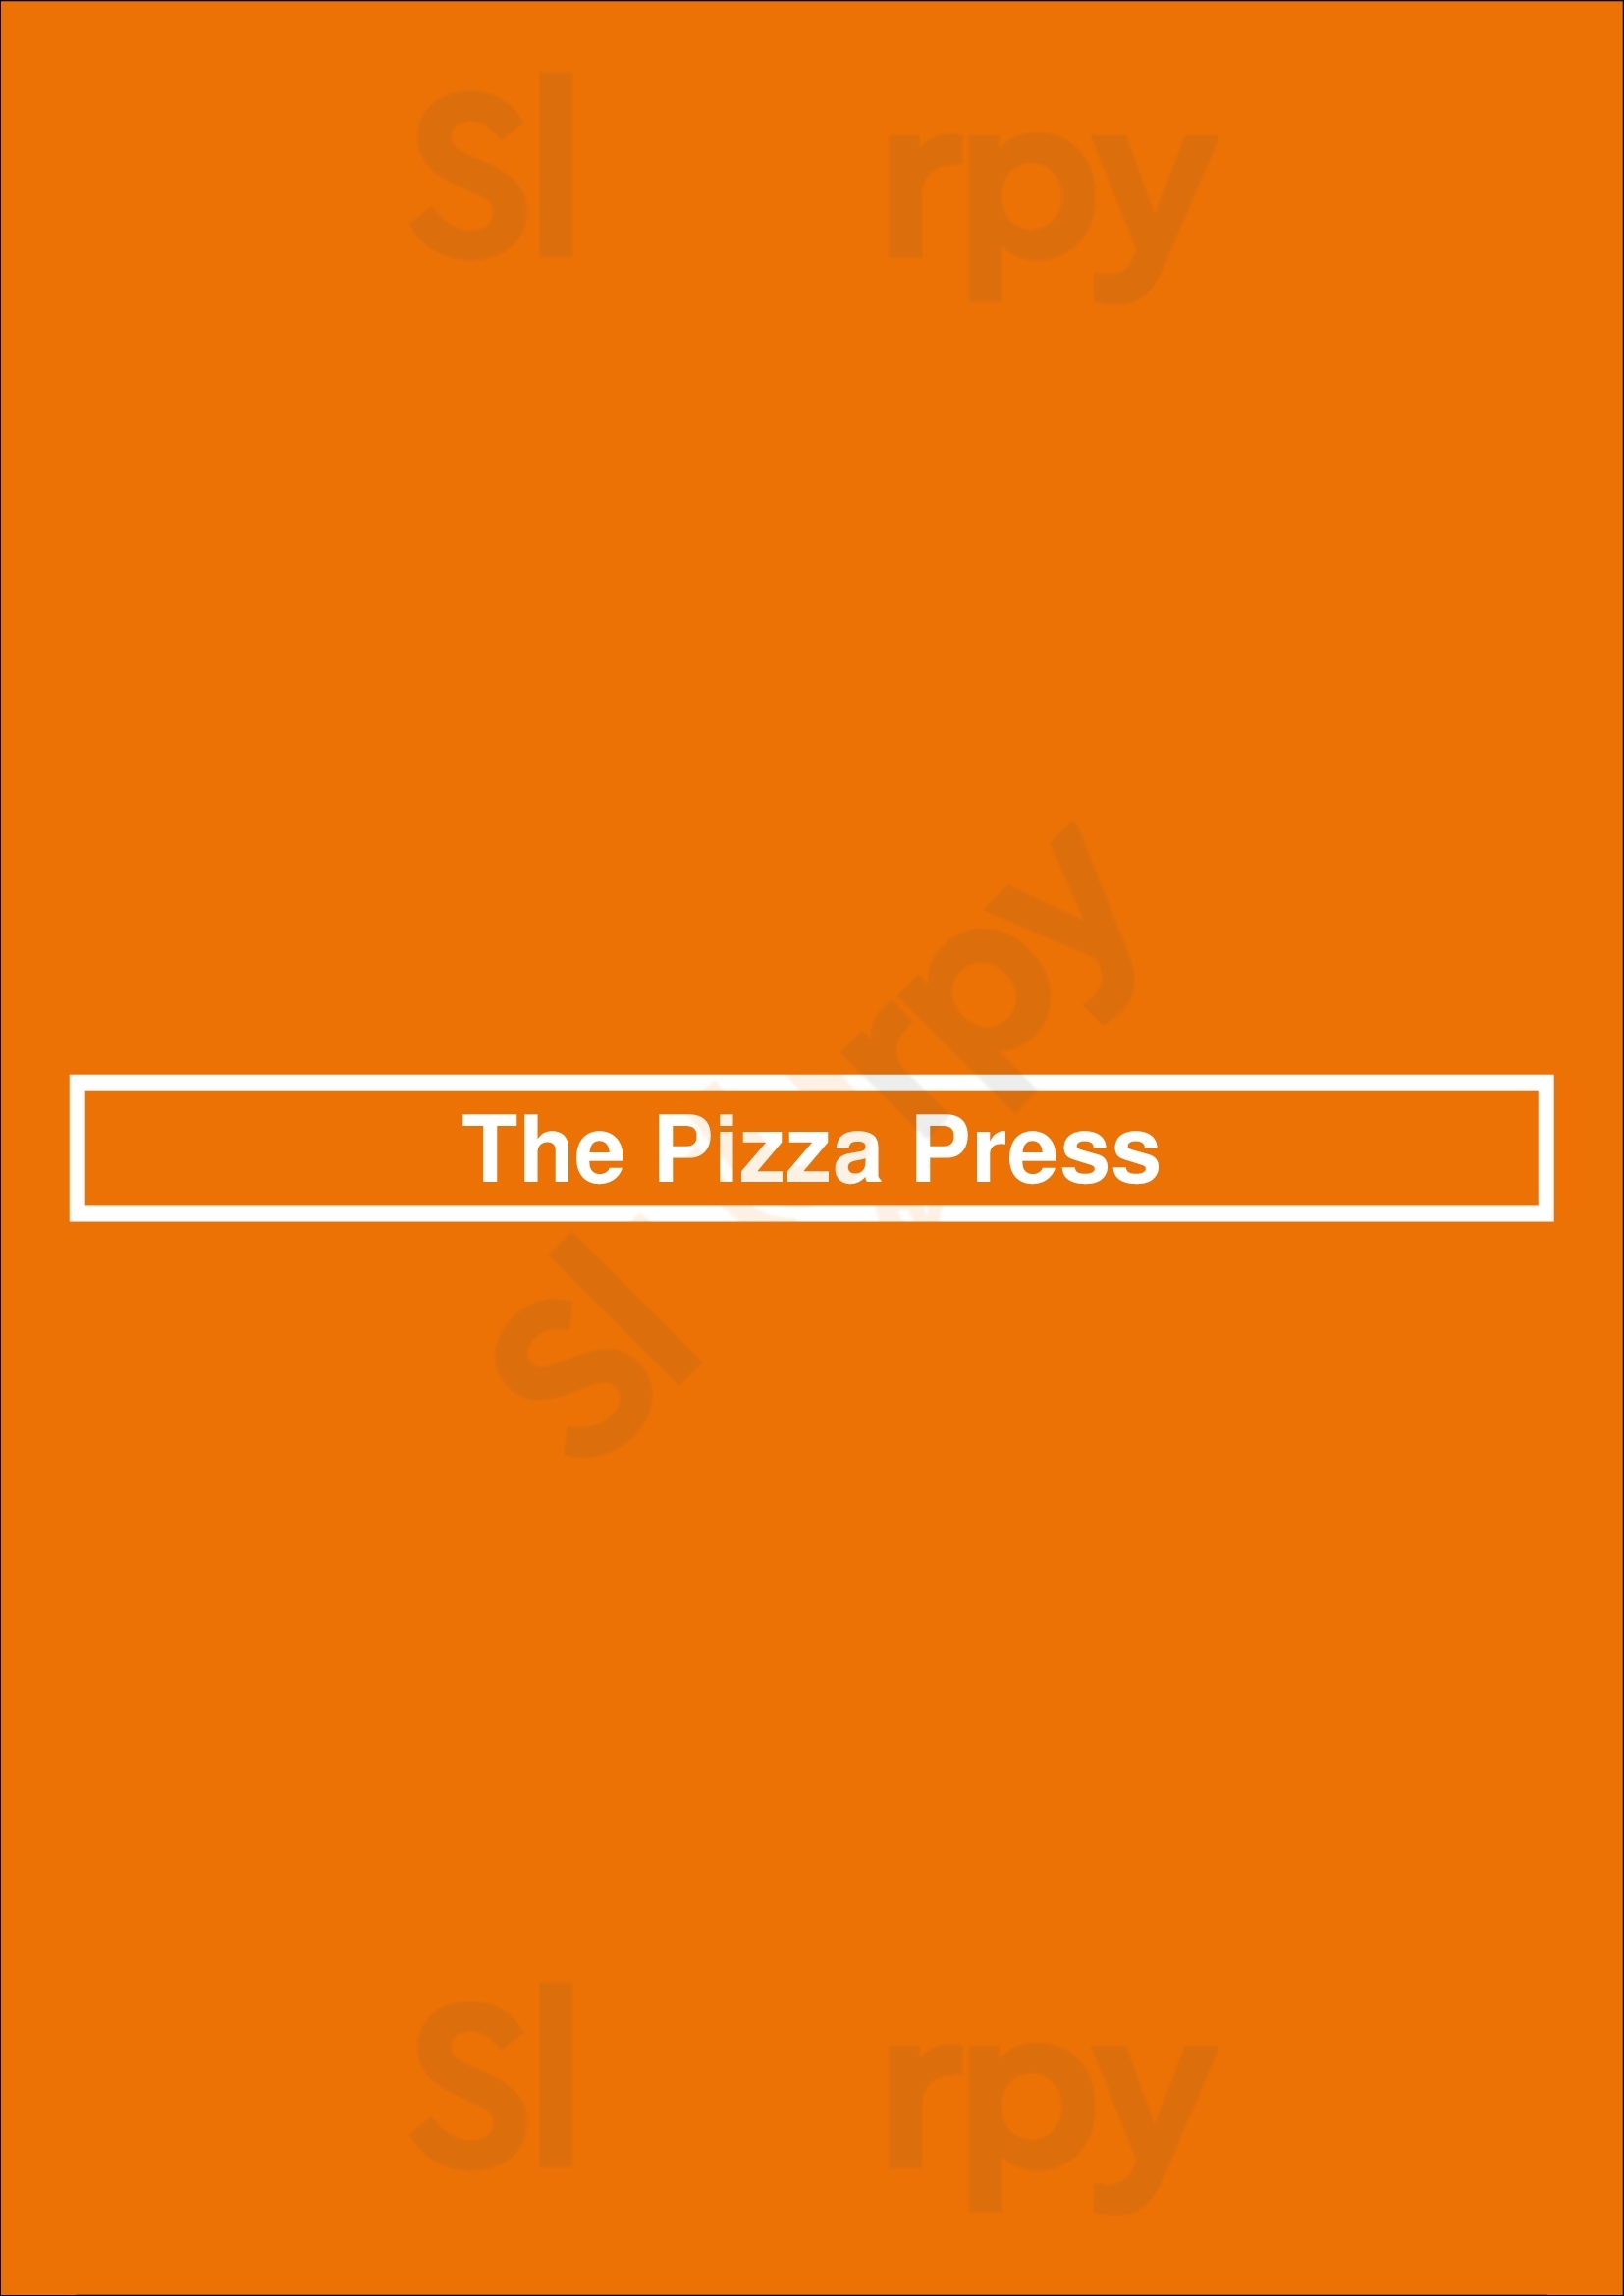 The Pizza Press Los Angeles Menu - 1